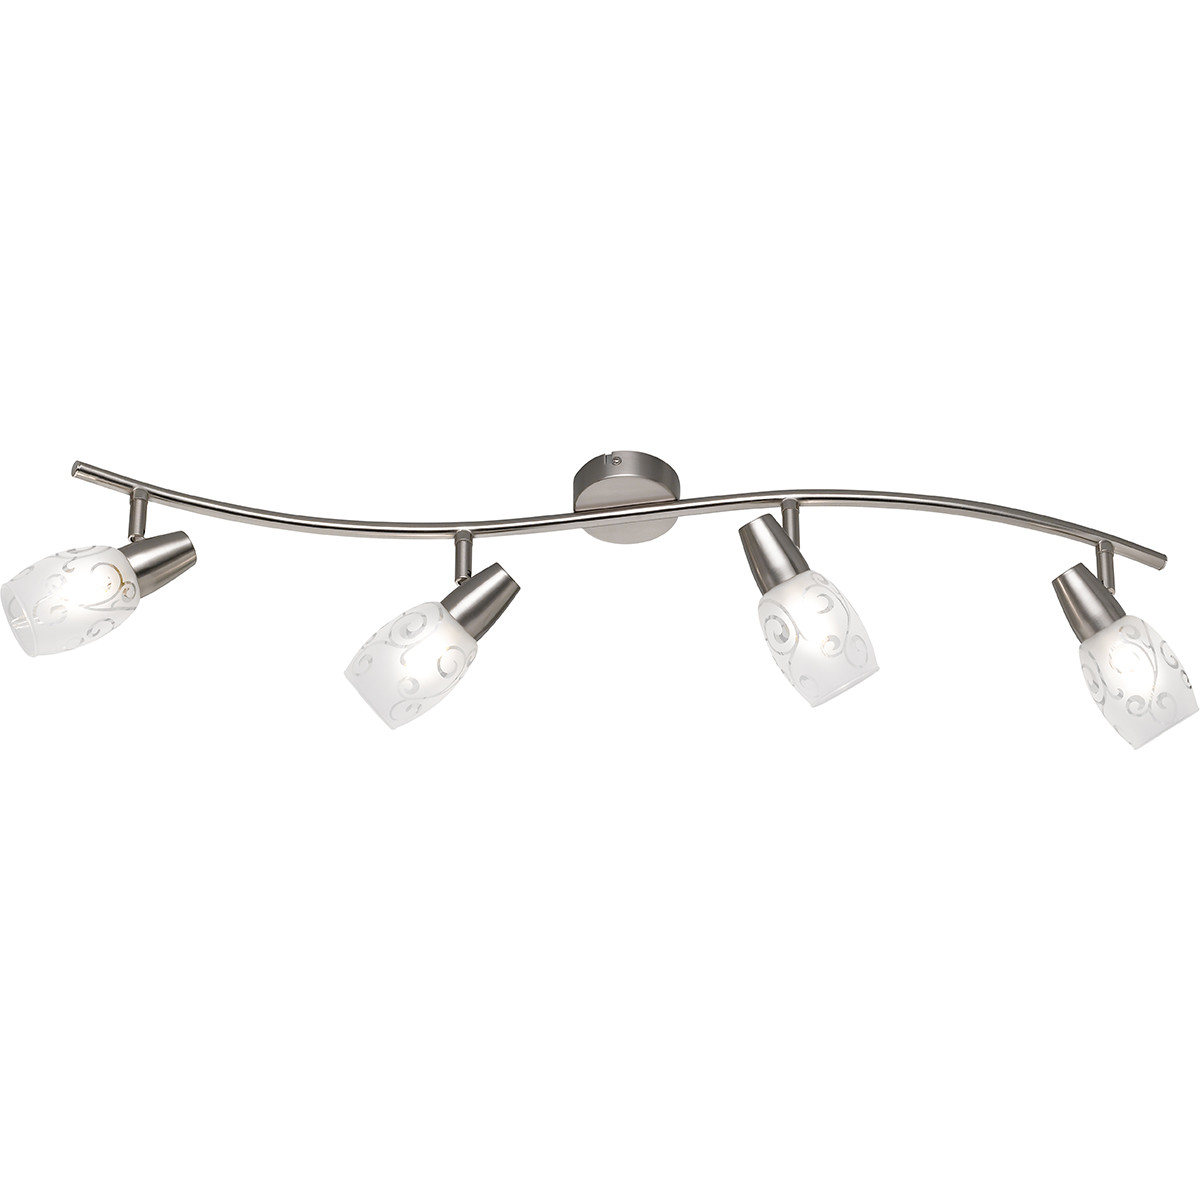 LED Plafondspot - Plafondverlichting - Trion Kalora - E14 Fitting - 4-lichts - Rechthoek - Mat Nikkel - Aluminium kopen?